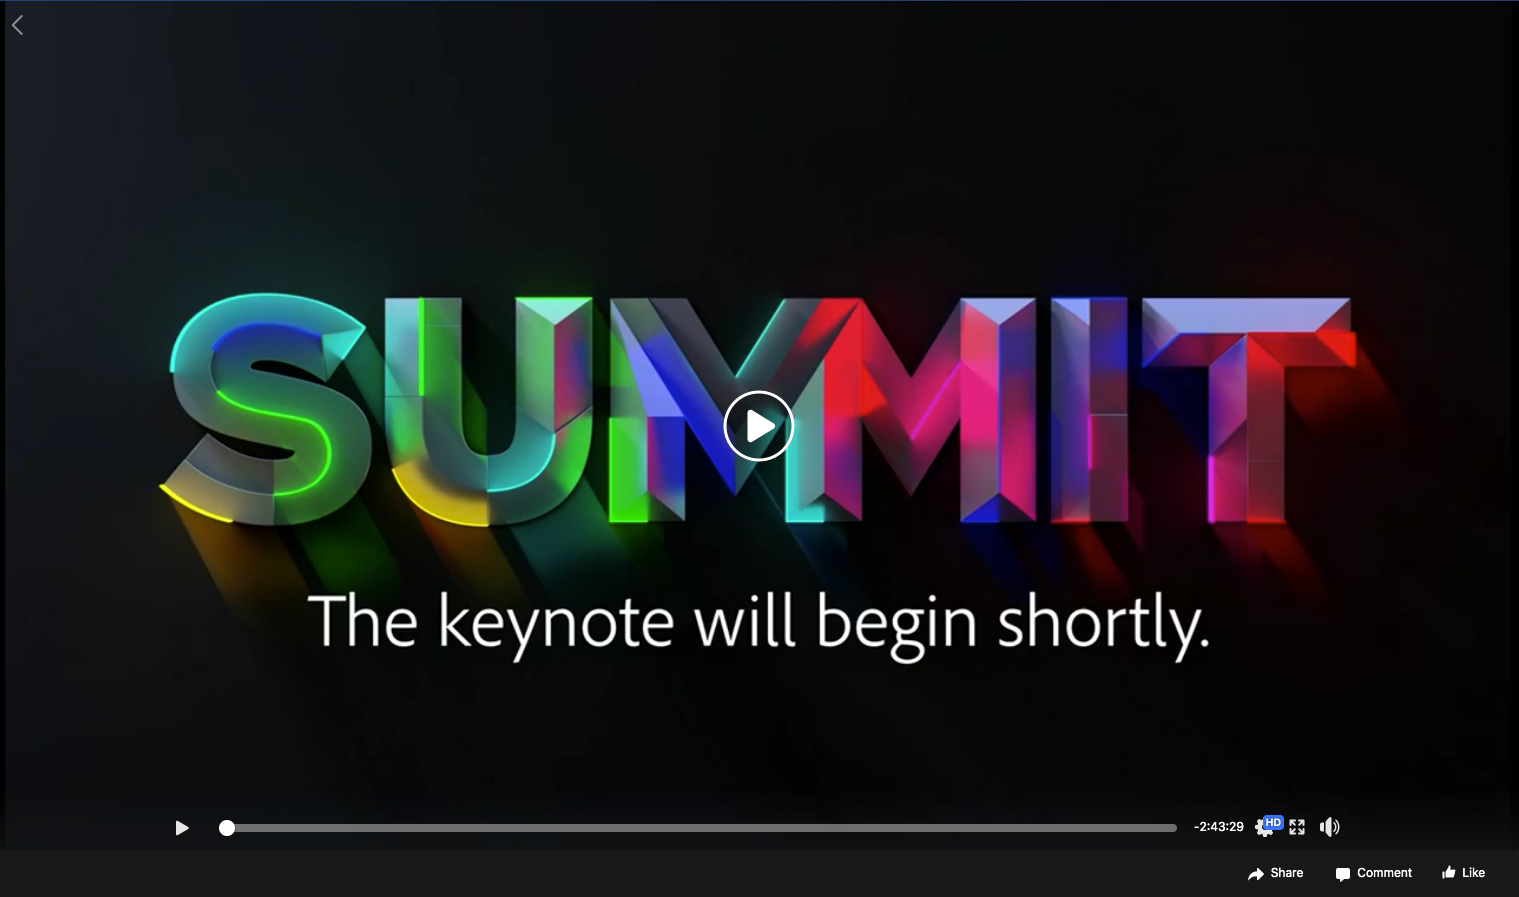 Marketo live streamed Adobe Summit on Facebook Live Video